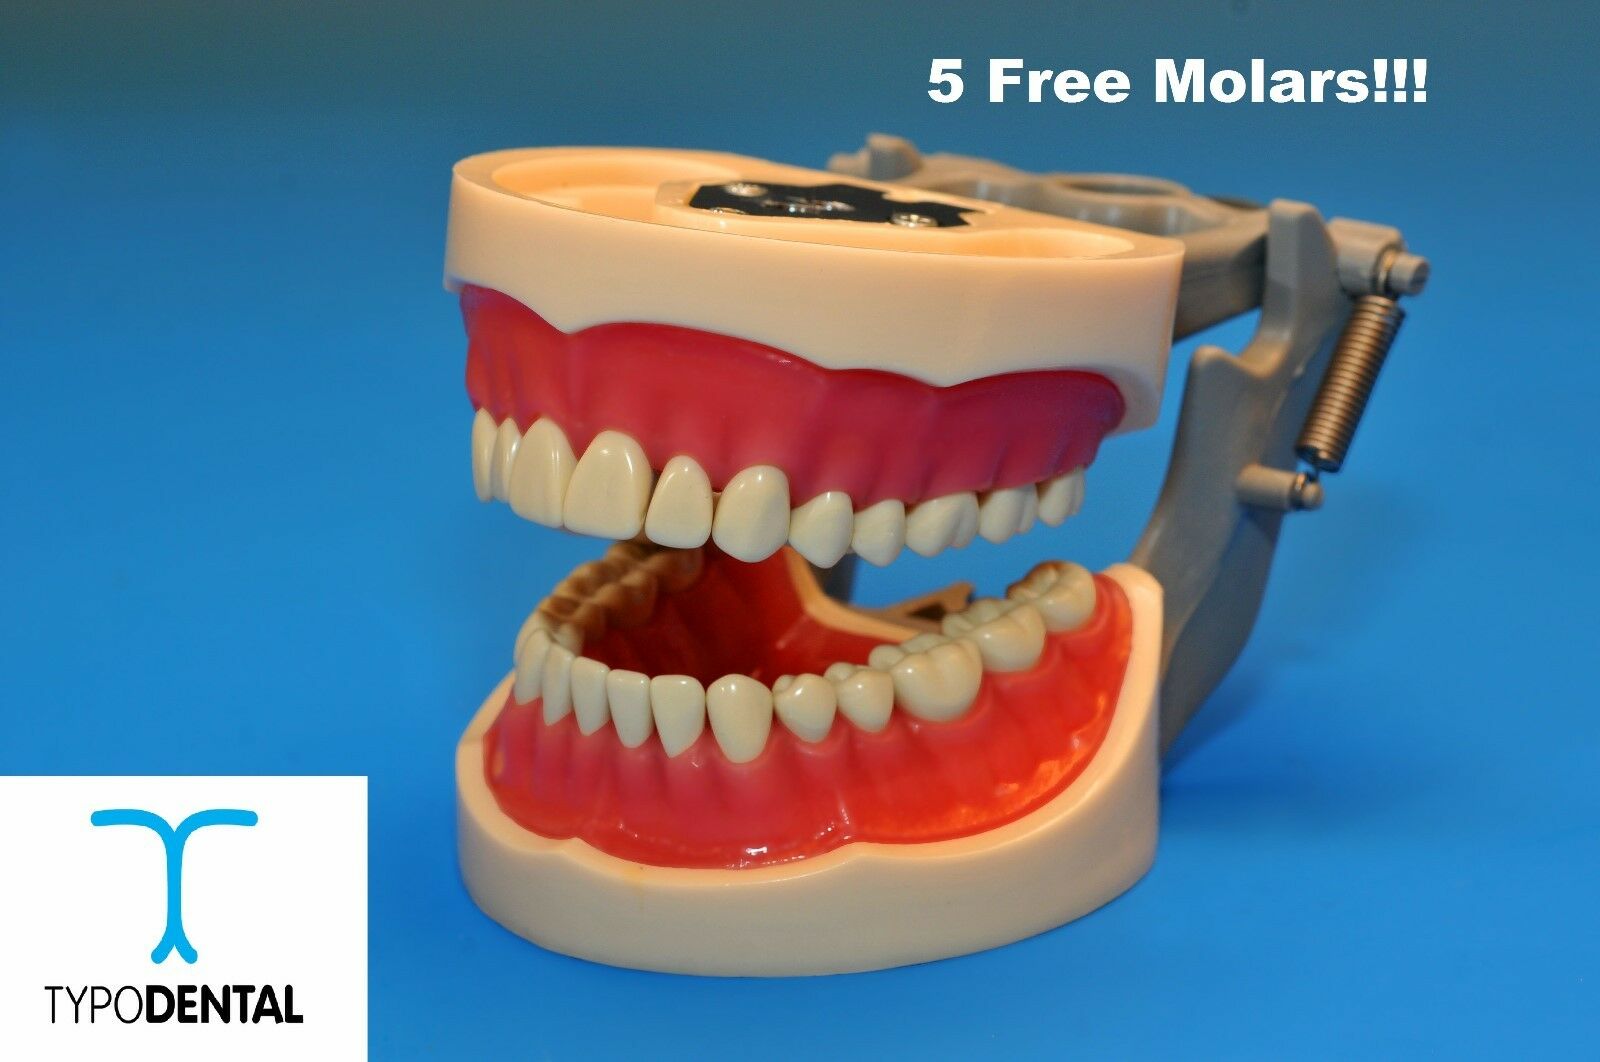 Typodont Dental Model 200 Works With Kilgore Brand Teeth (5 Free Molars)